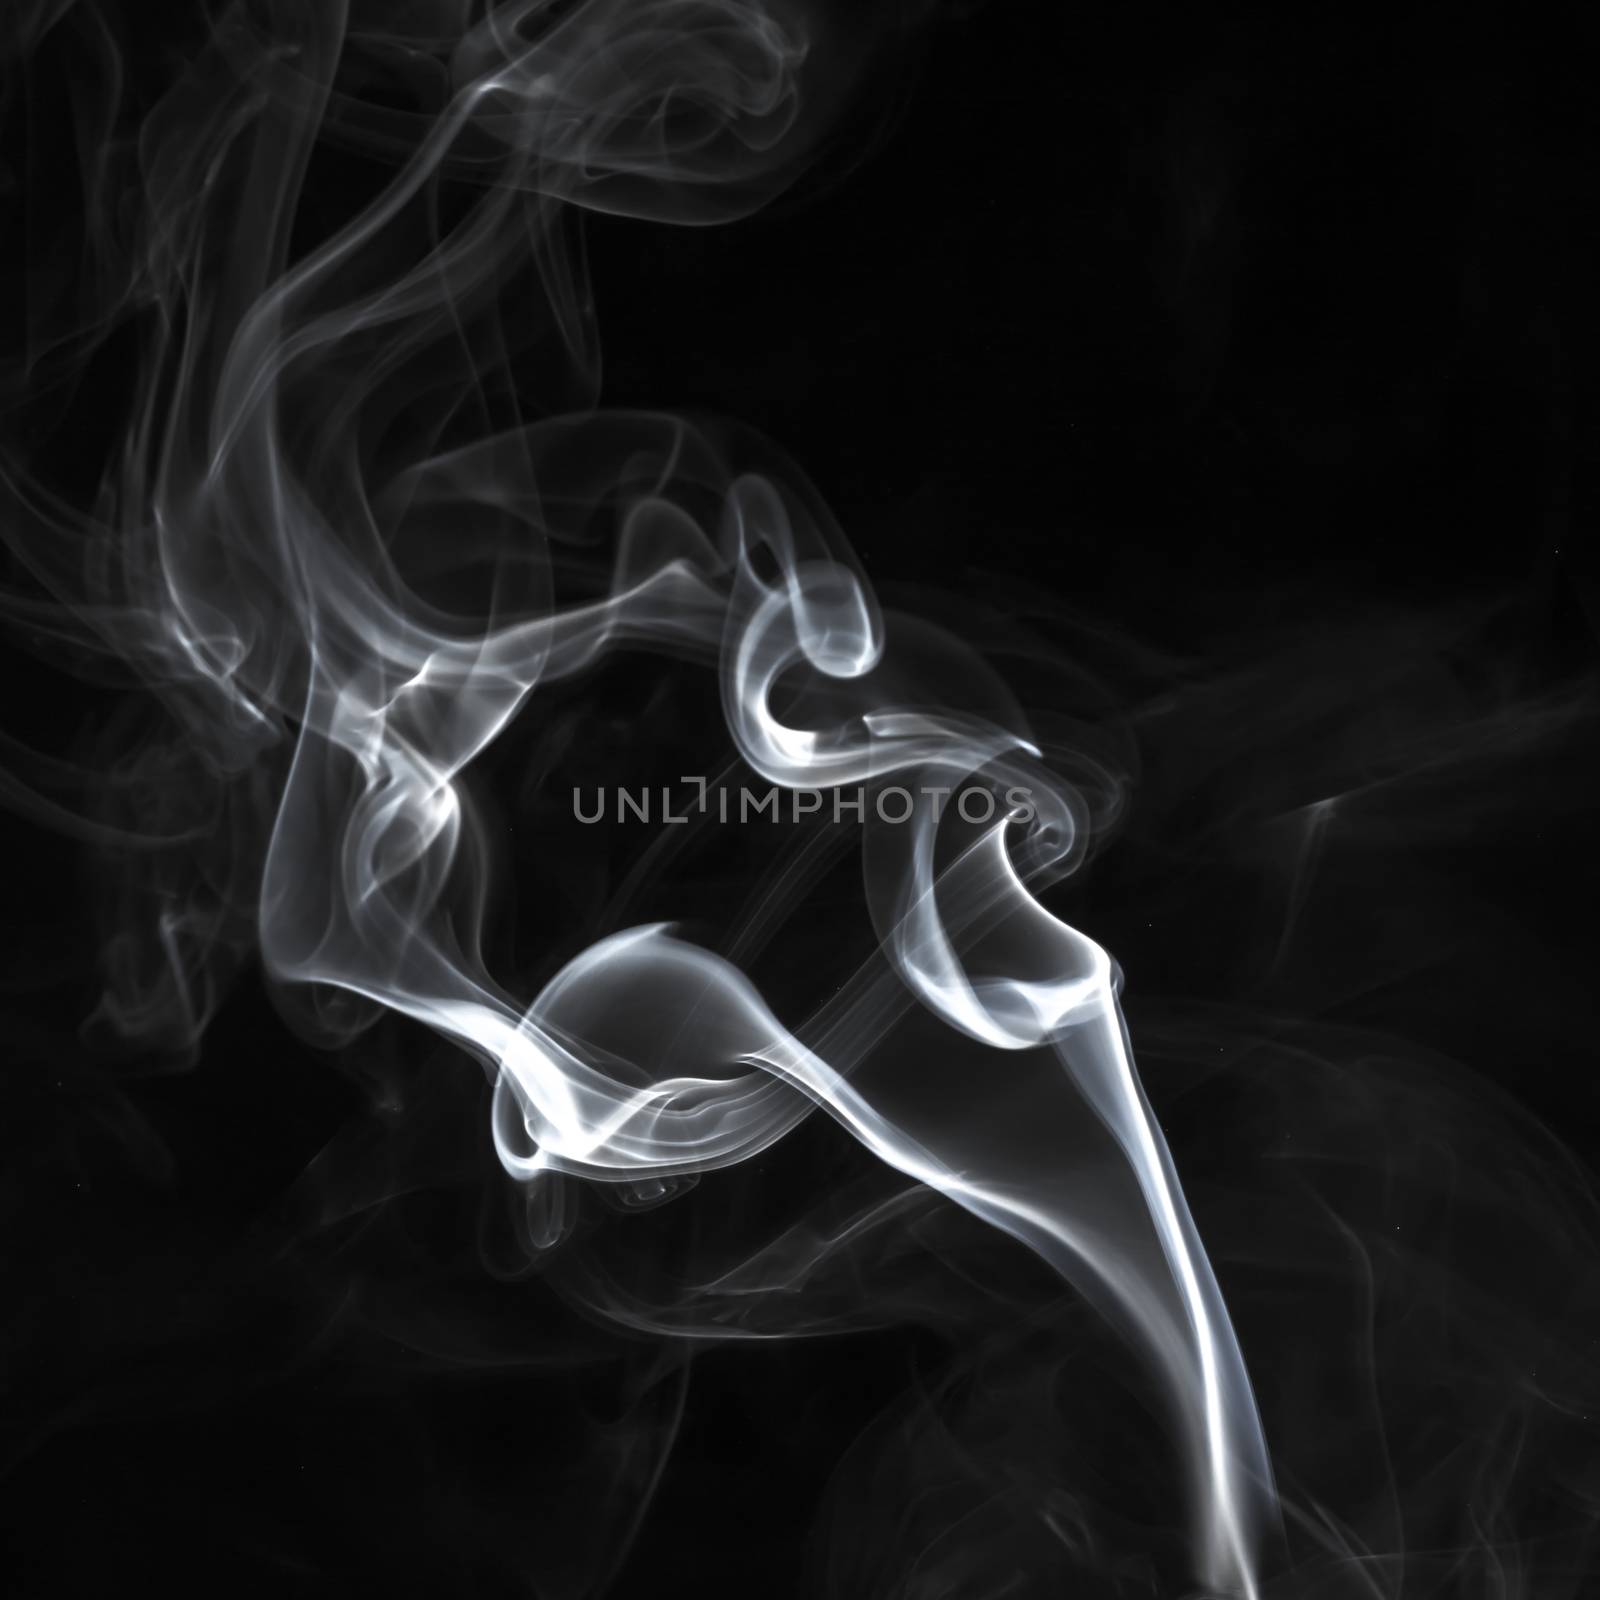 Abstract white smoke swirls pattern over the black background by petrsvoboda91